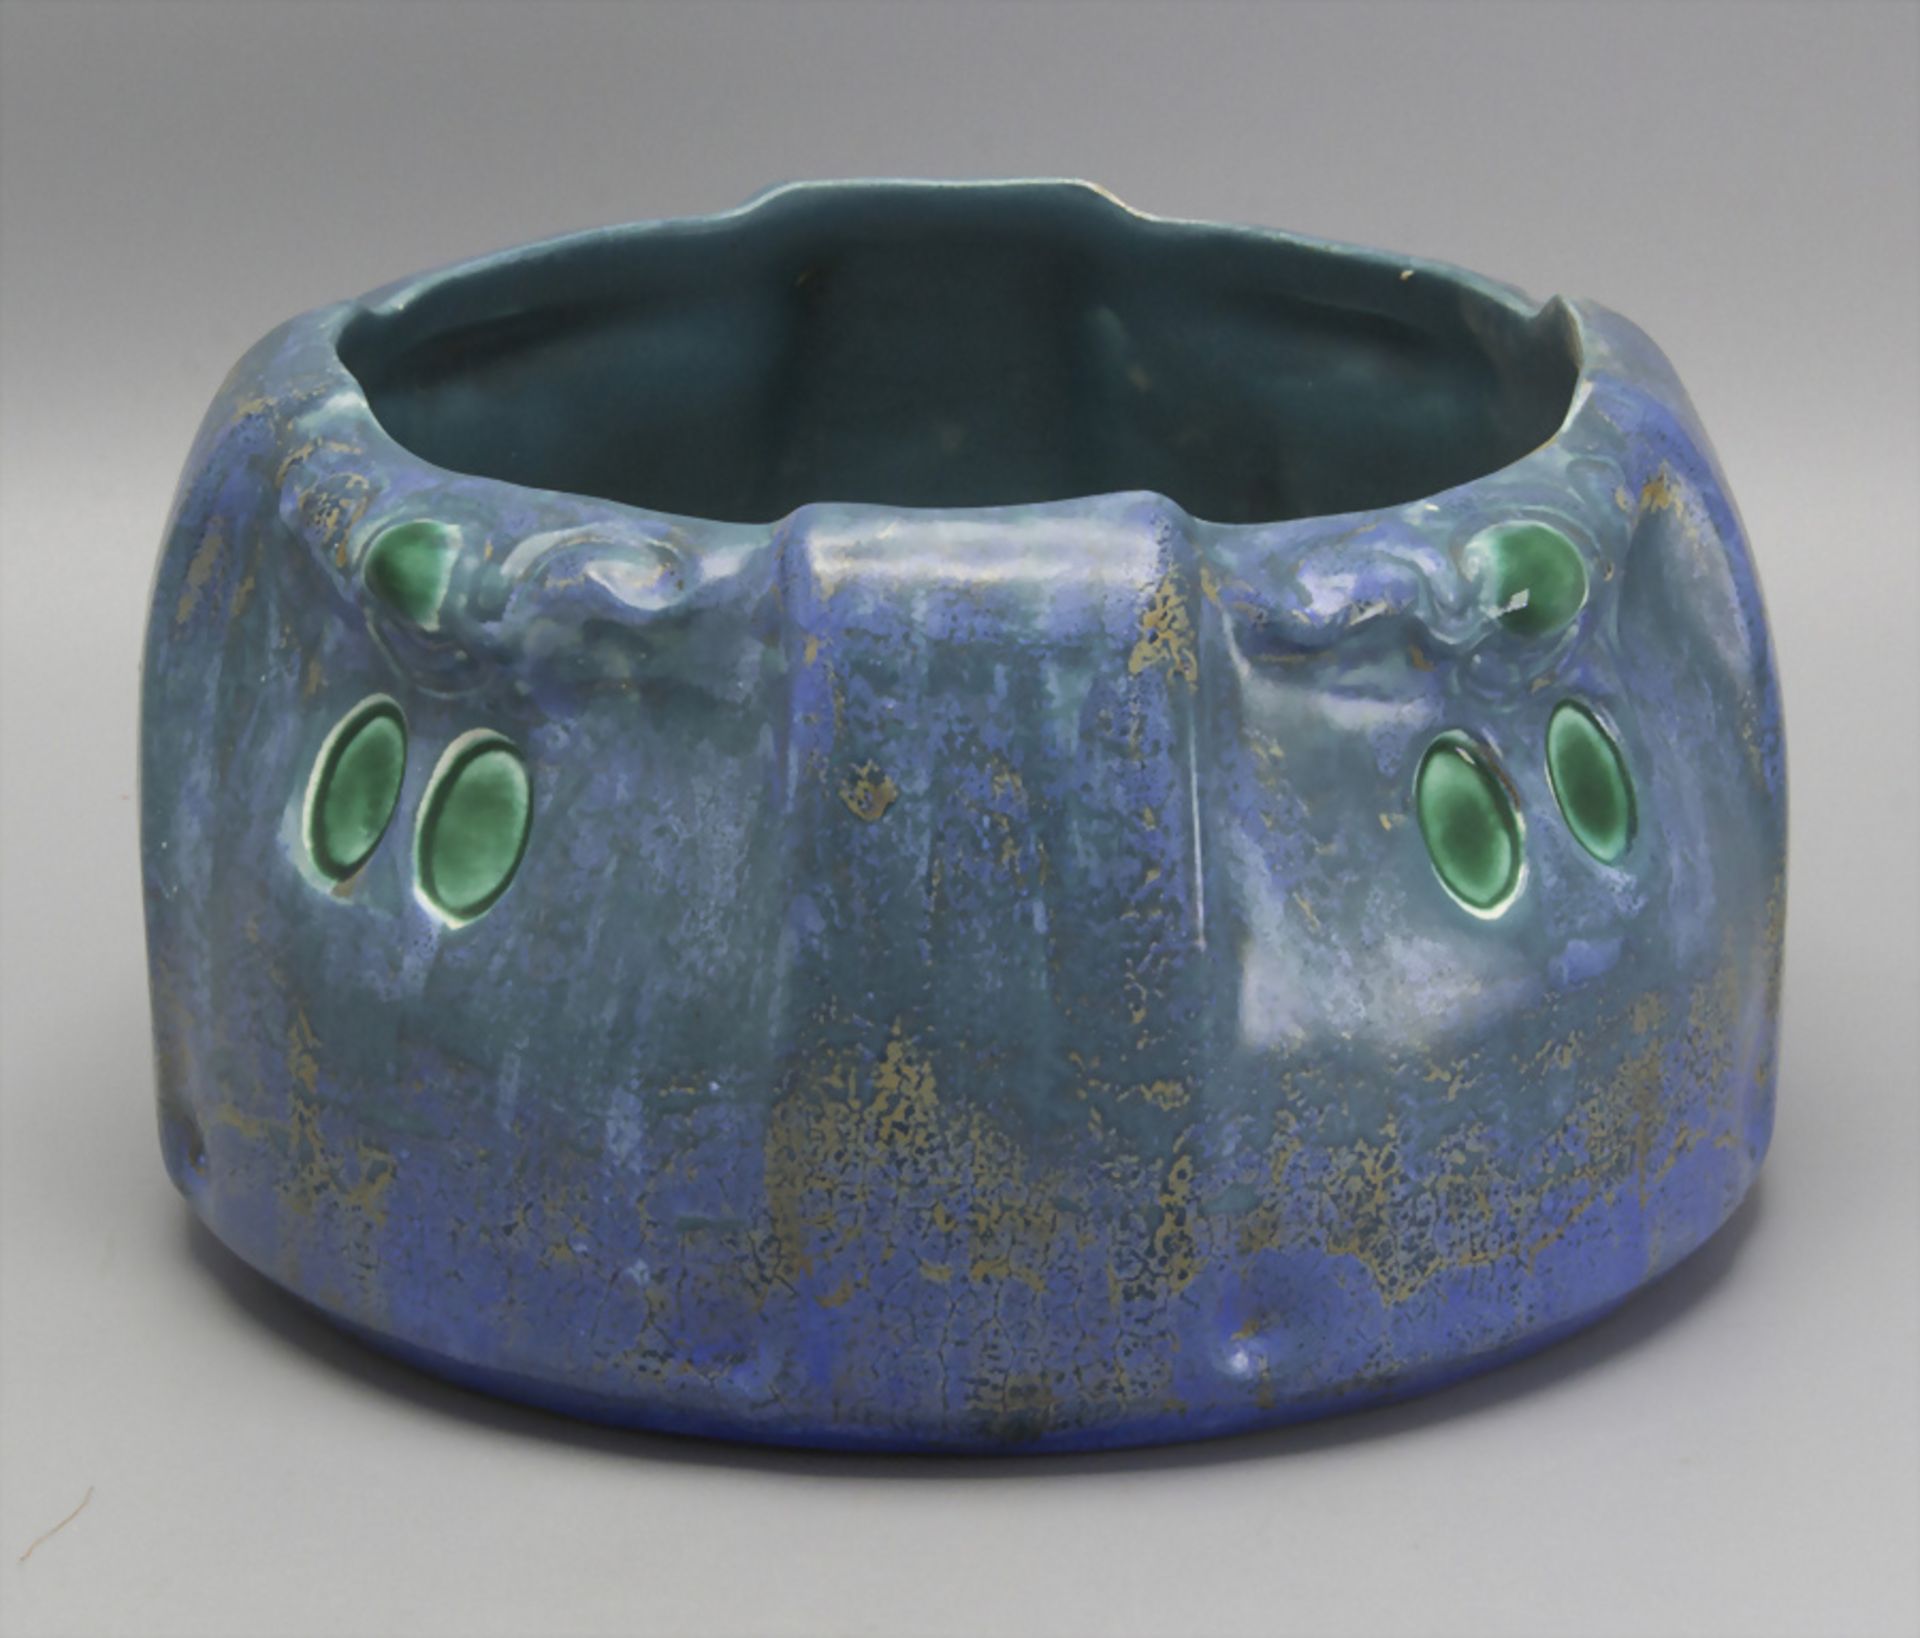 Jugendstil Keramikschale / An Art Nouveau ceramic bowl, Julius Dressler, Östereich, um 1900